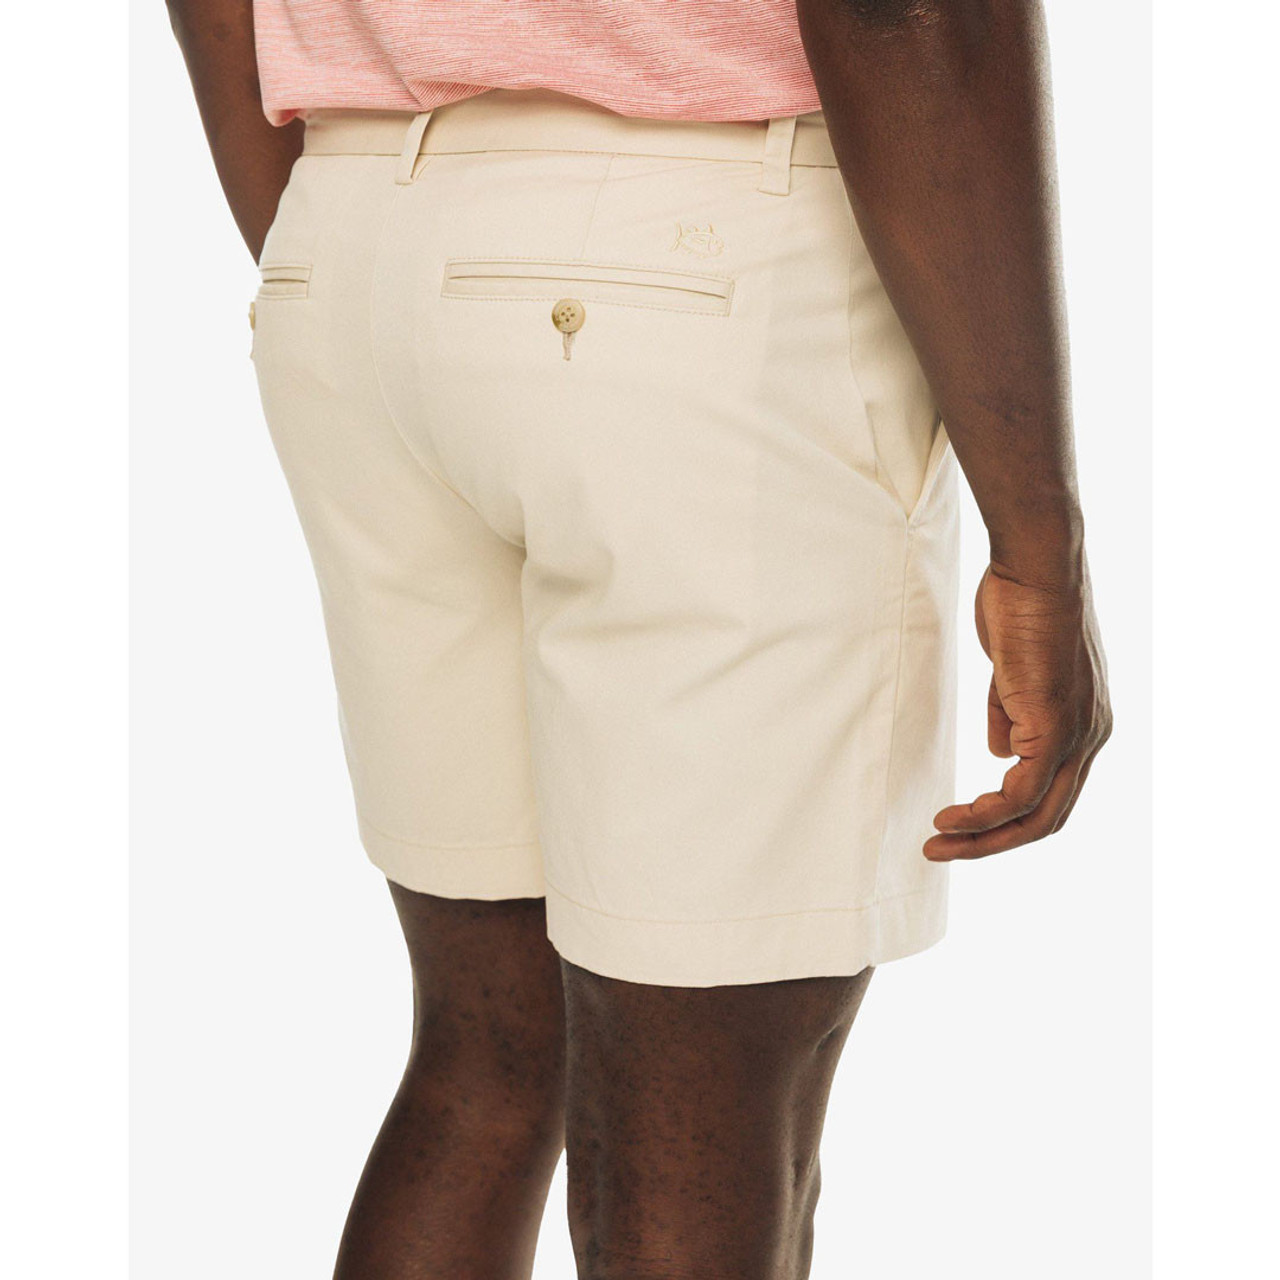 Men's 7 Inch Khaki Shorts - Channel Marker Fabric